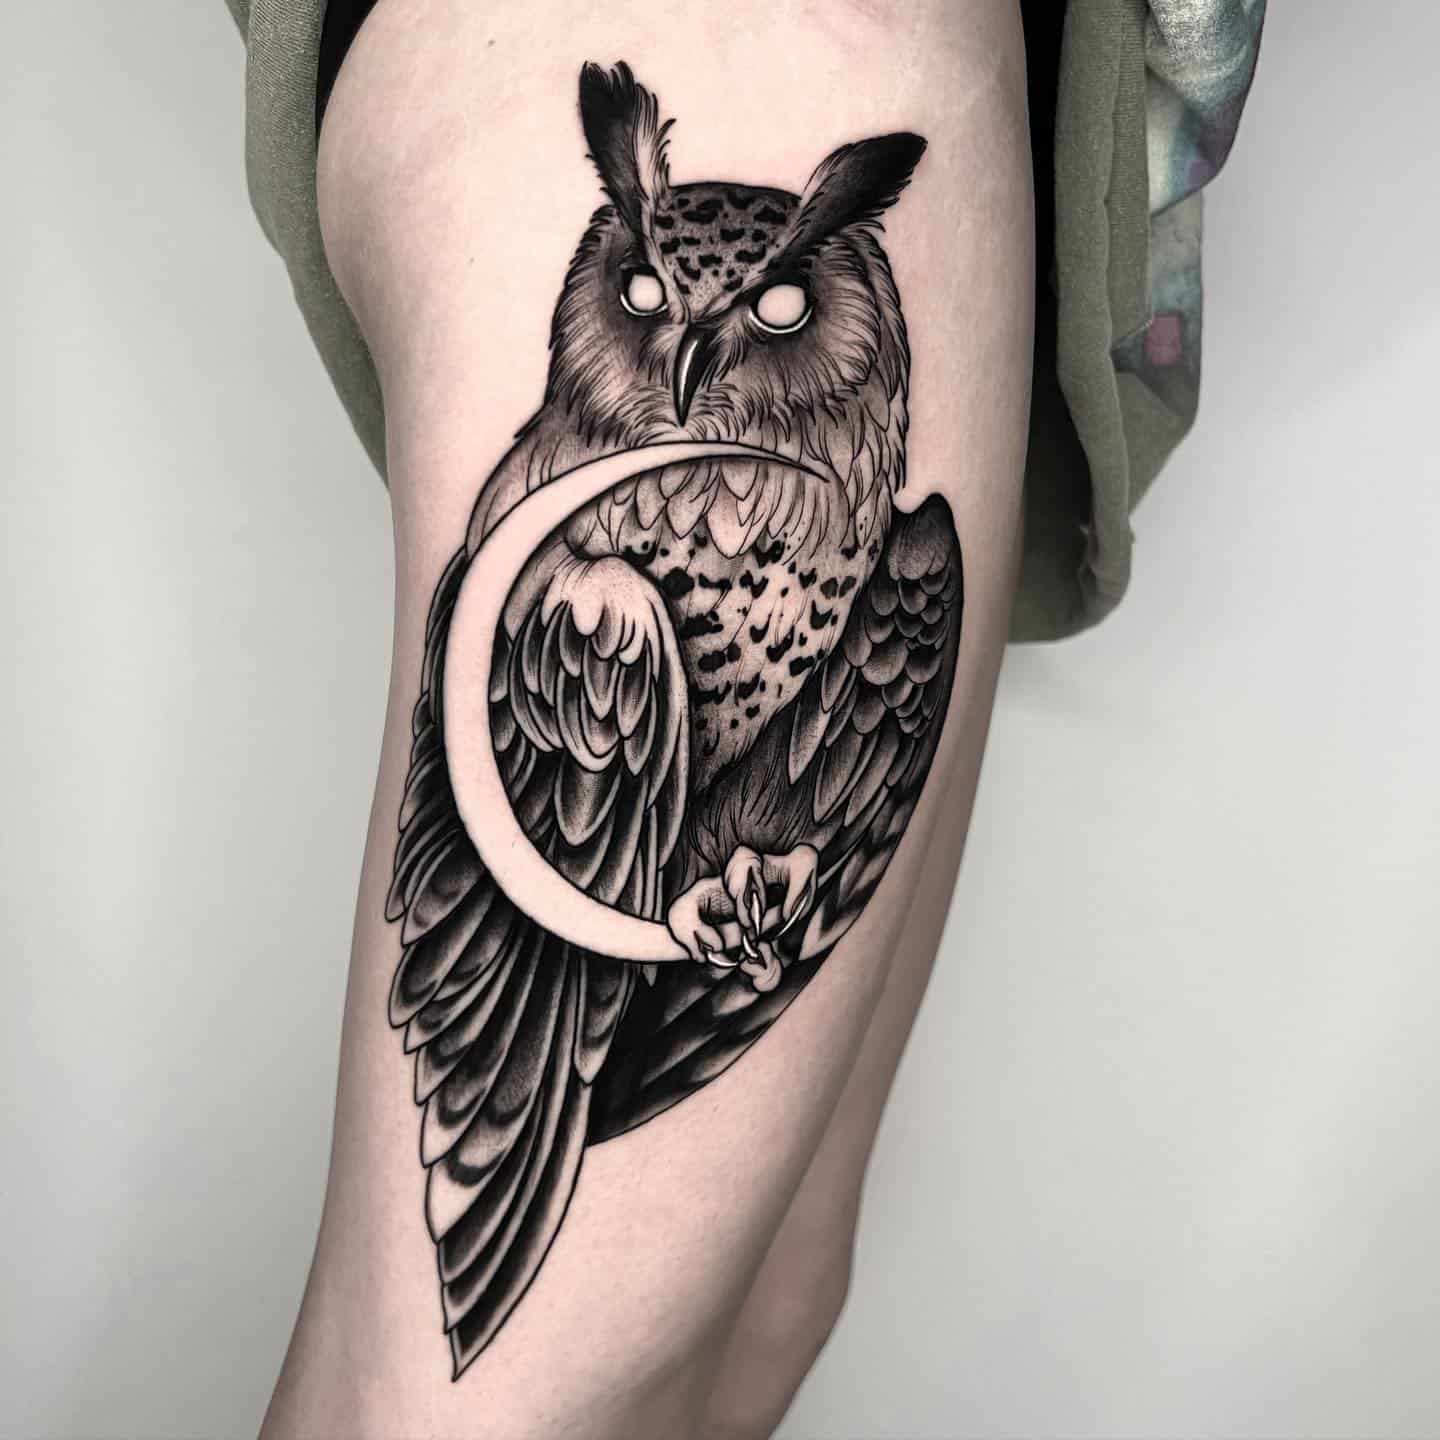 Owl tattoo by